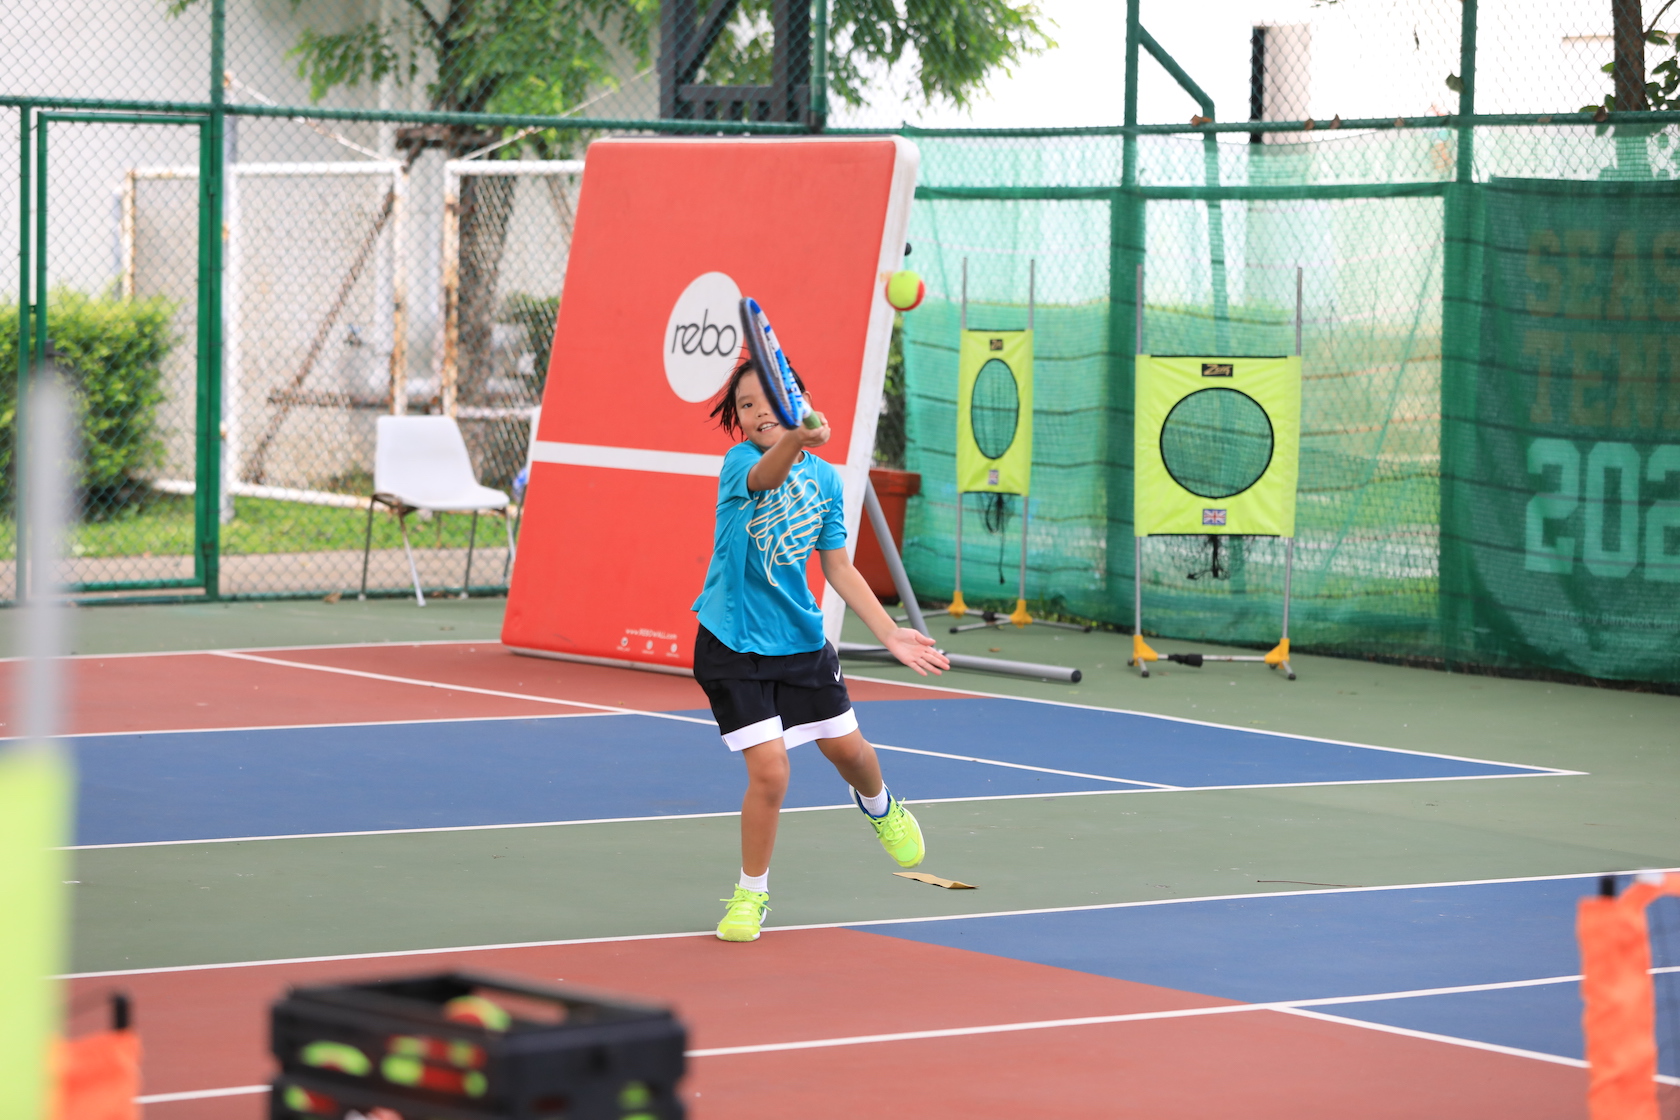 Mini-Tennis Camp Encourages Budding Tennis Players